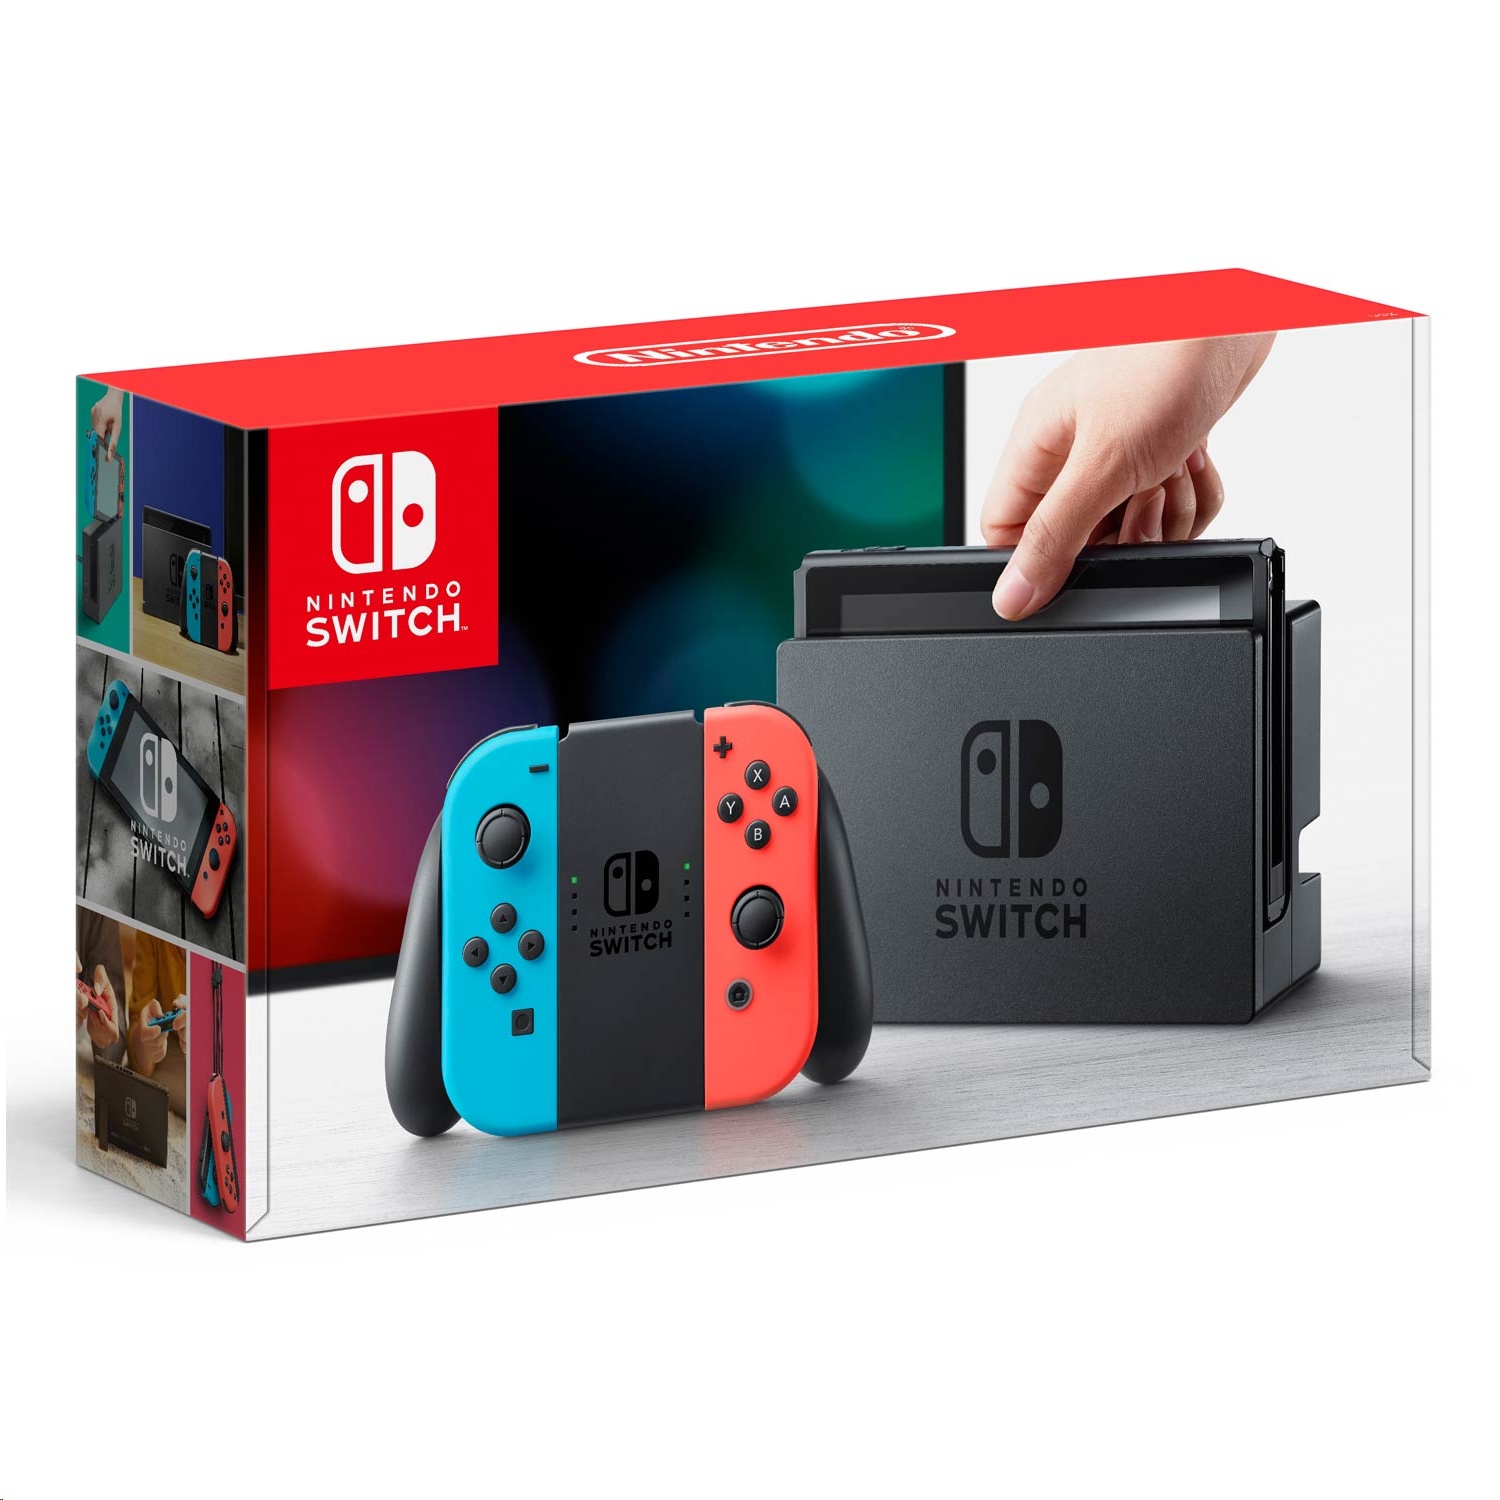 Eneba: Shop Nintendo Switch Now!